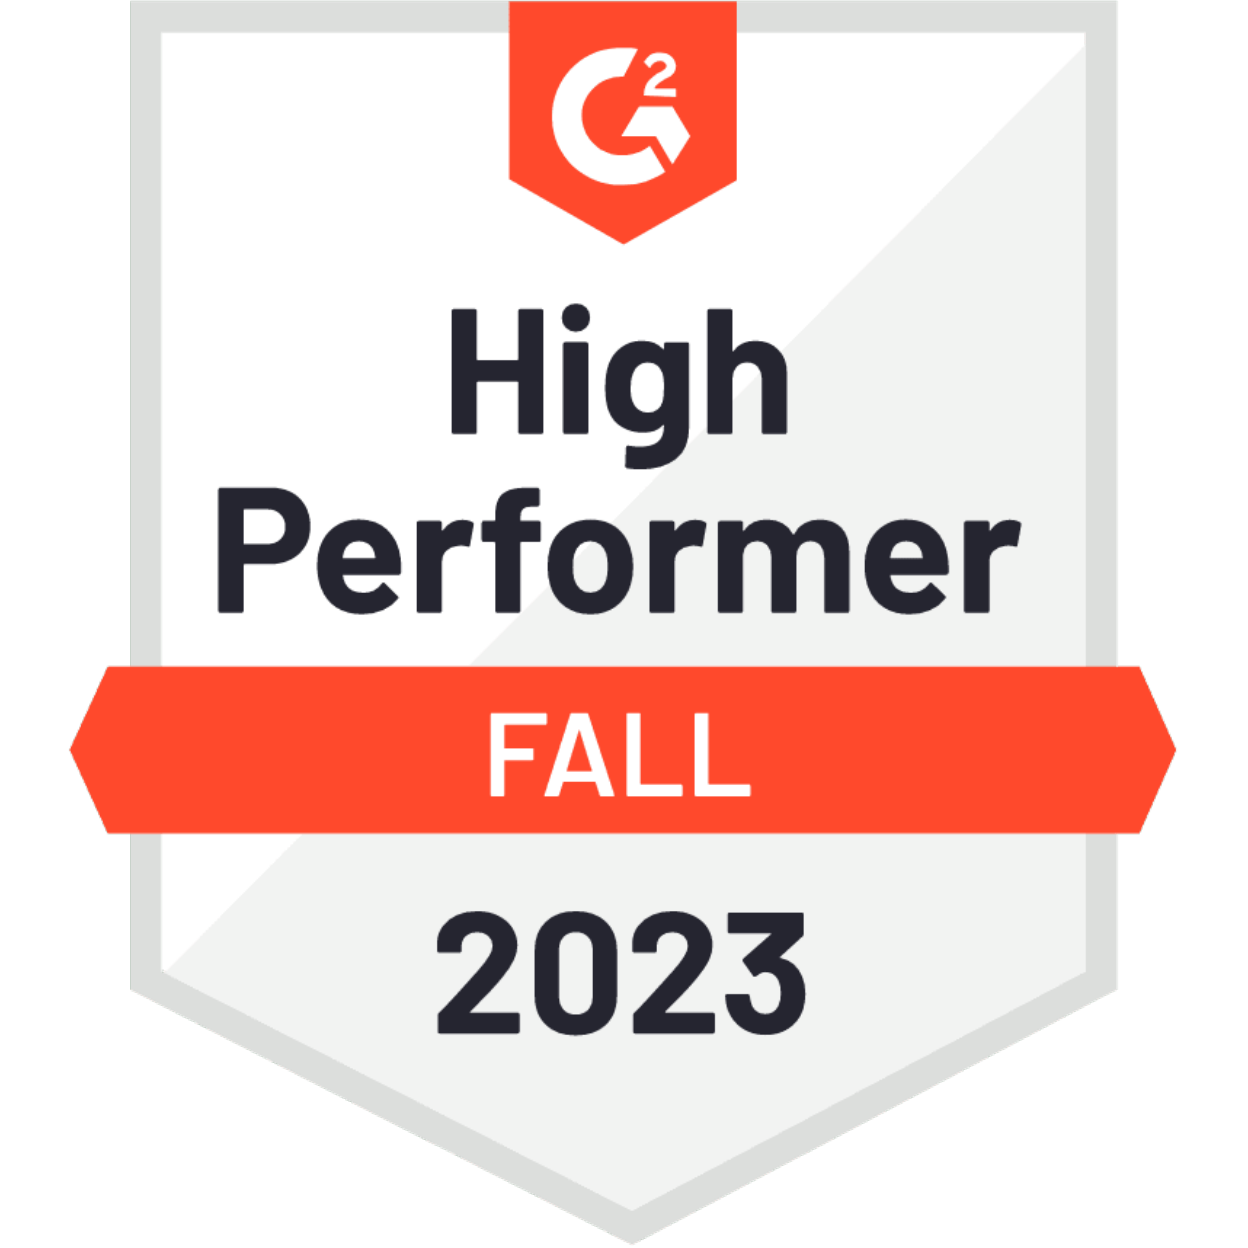 High_Performer_Fall_2023_600_600_nobg